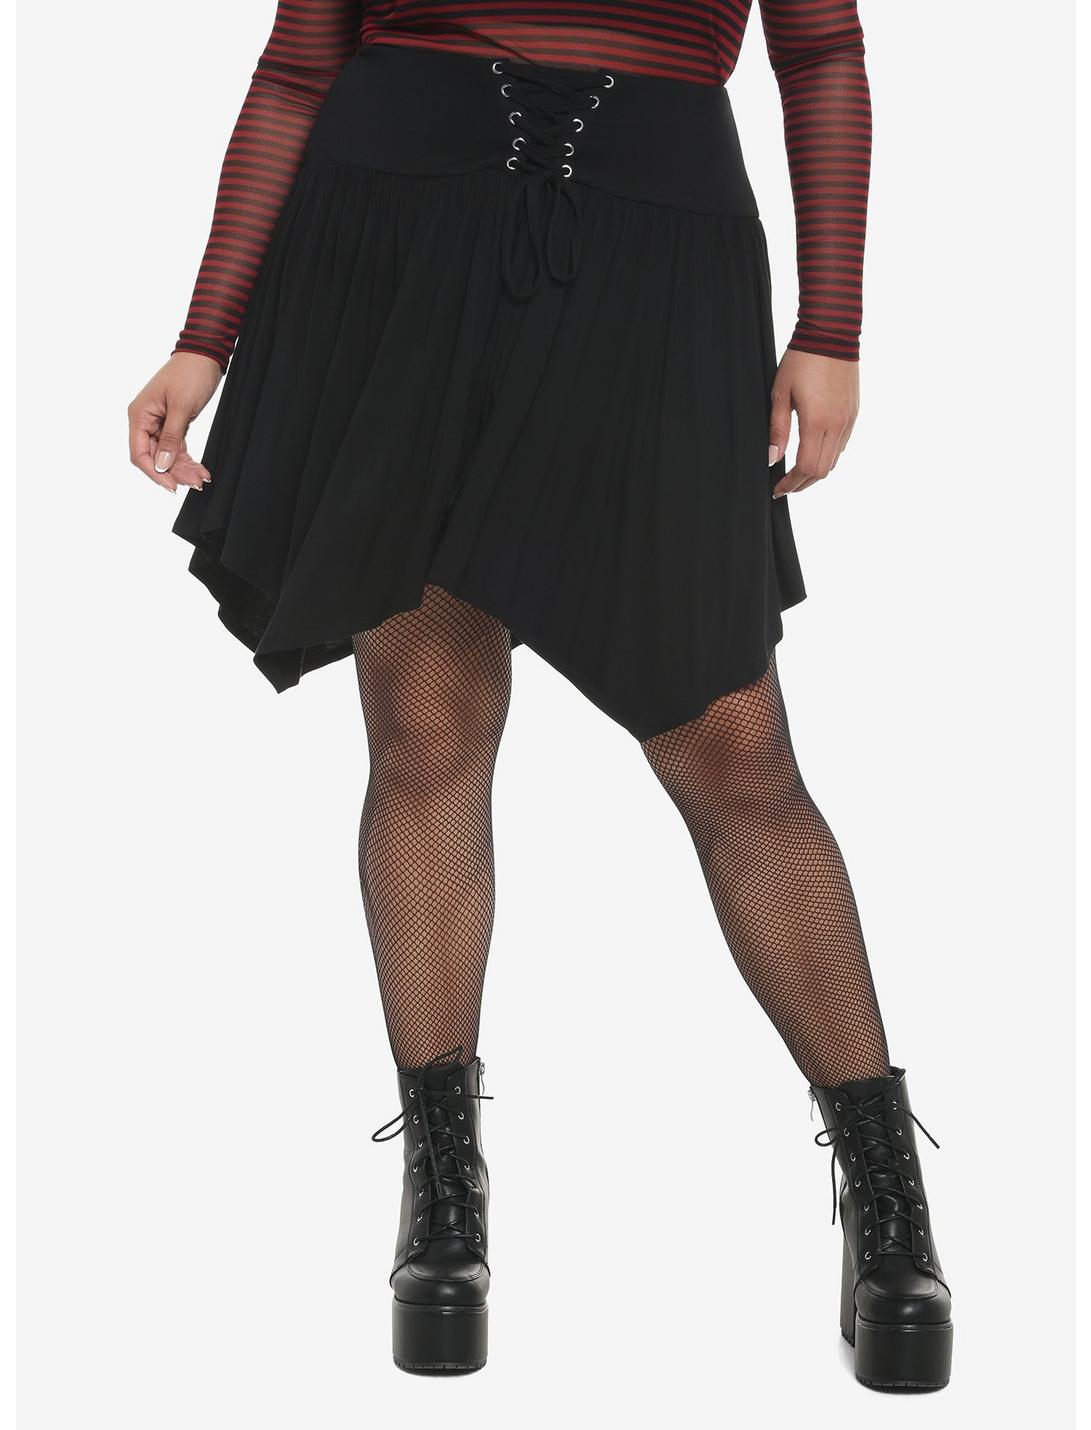 Black Lace-Up Hanky Hem Skirt Plus Size, BLACK, hi-res